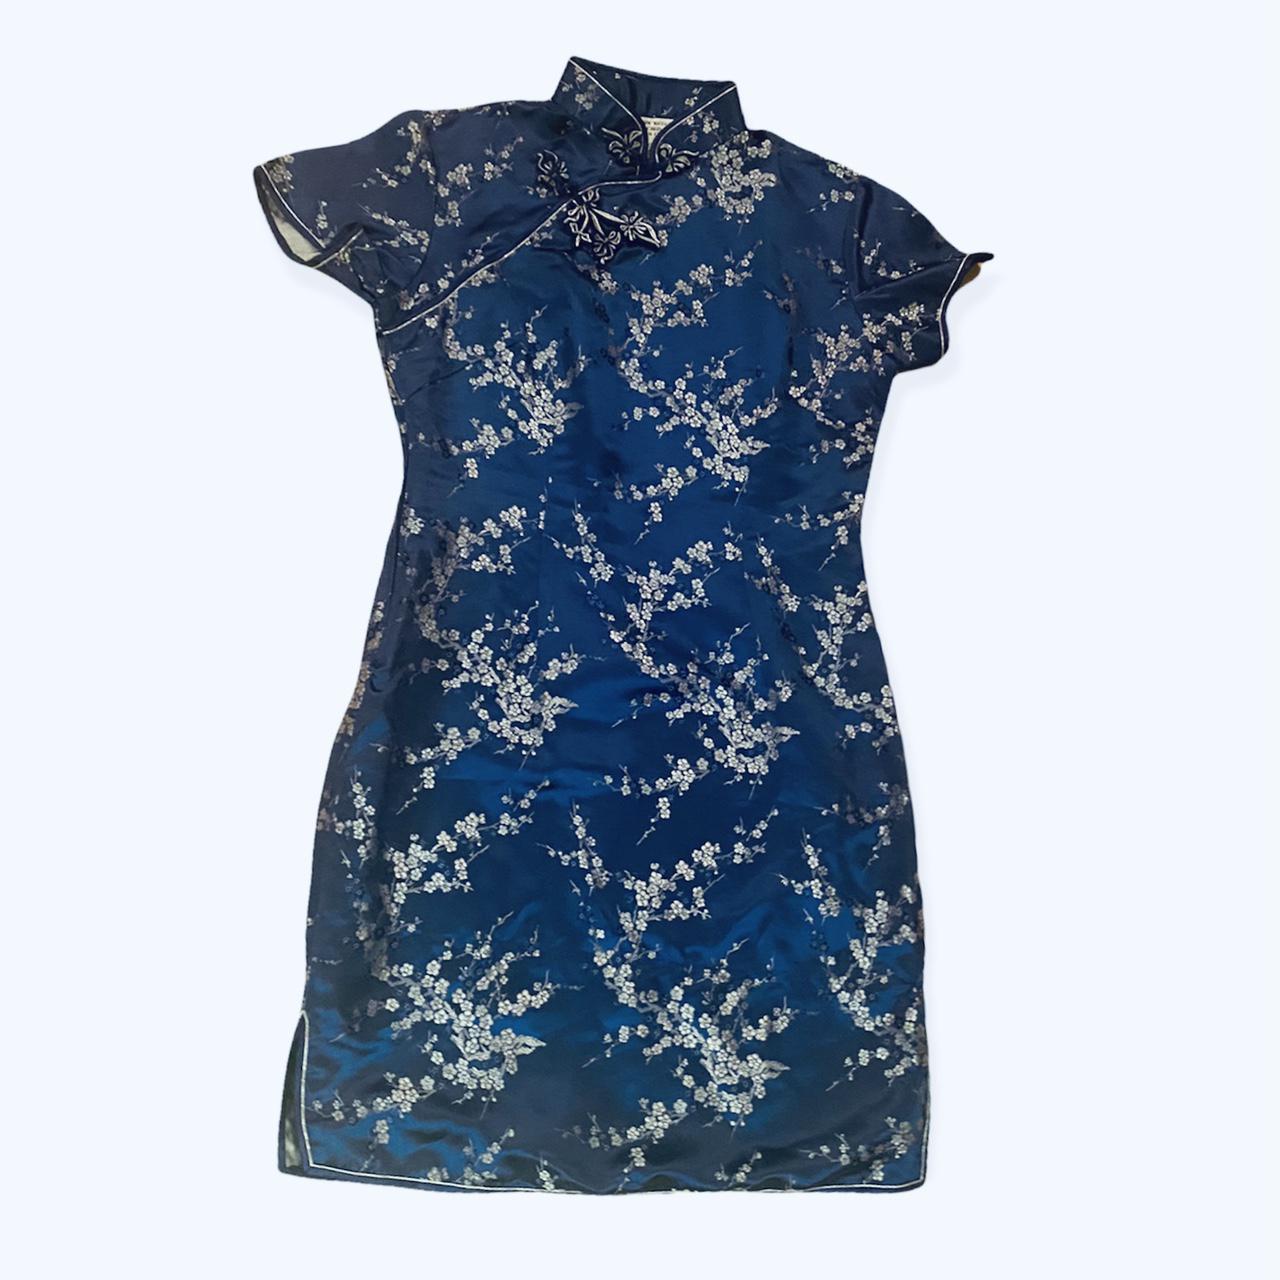 Product Image 1 - Vintage Chinese Cheongsam Dress:
(Short)
Dark Blue